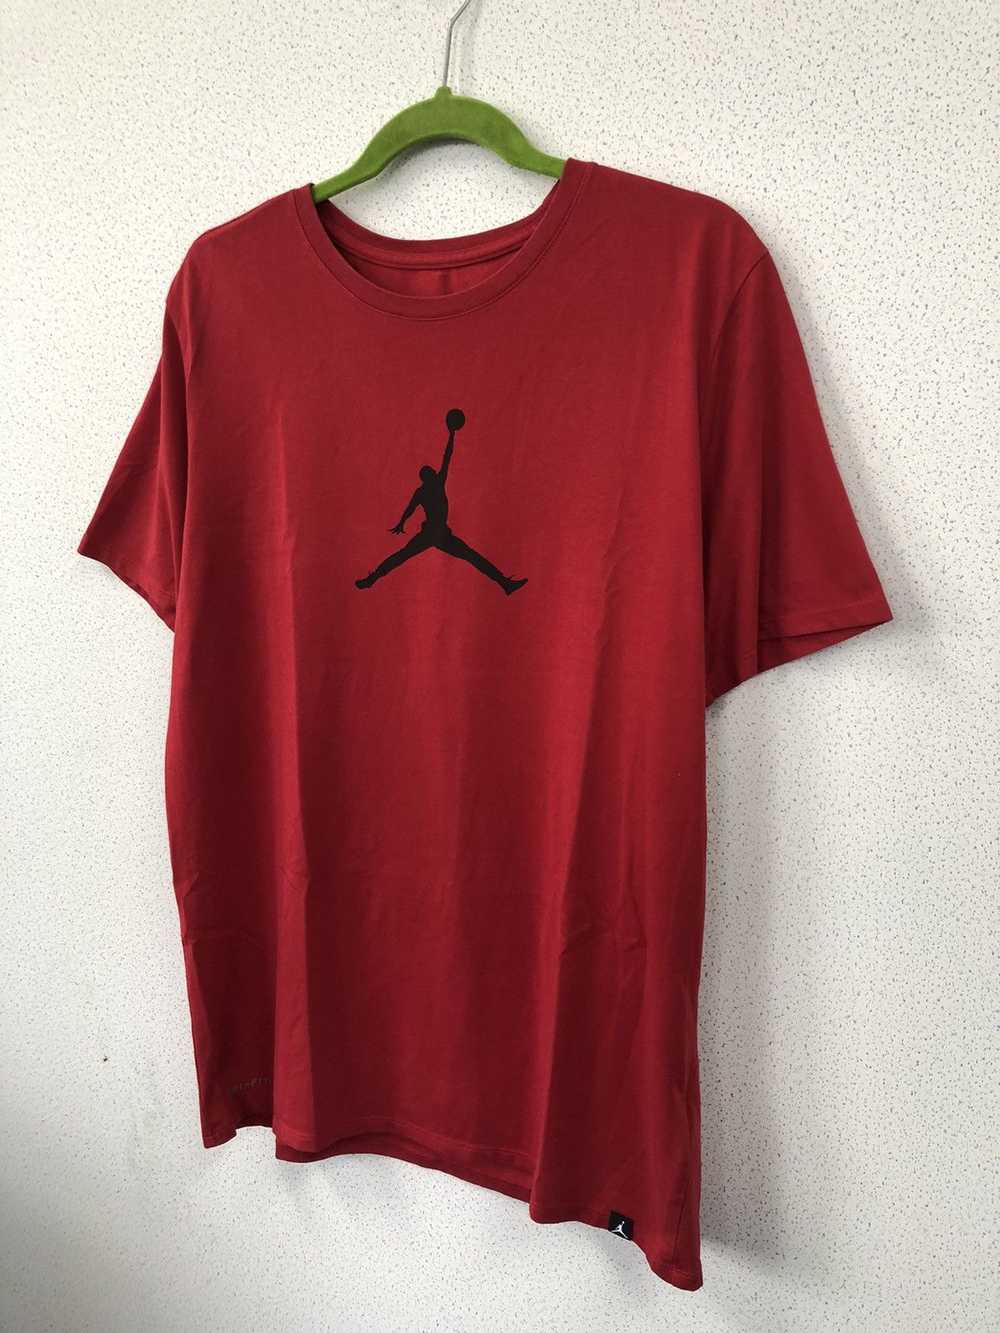 Jordan Brand × NBA × Nike Jordan Nike Red T-Shirt - image 3